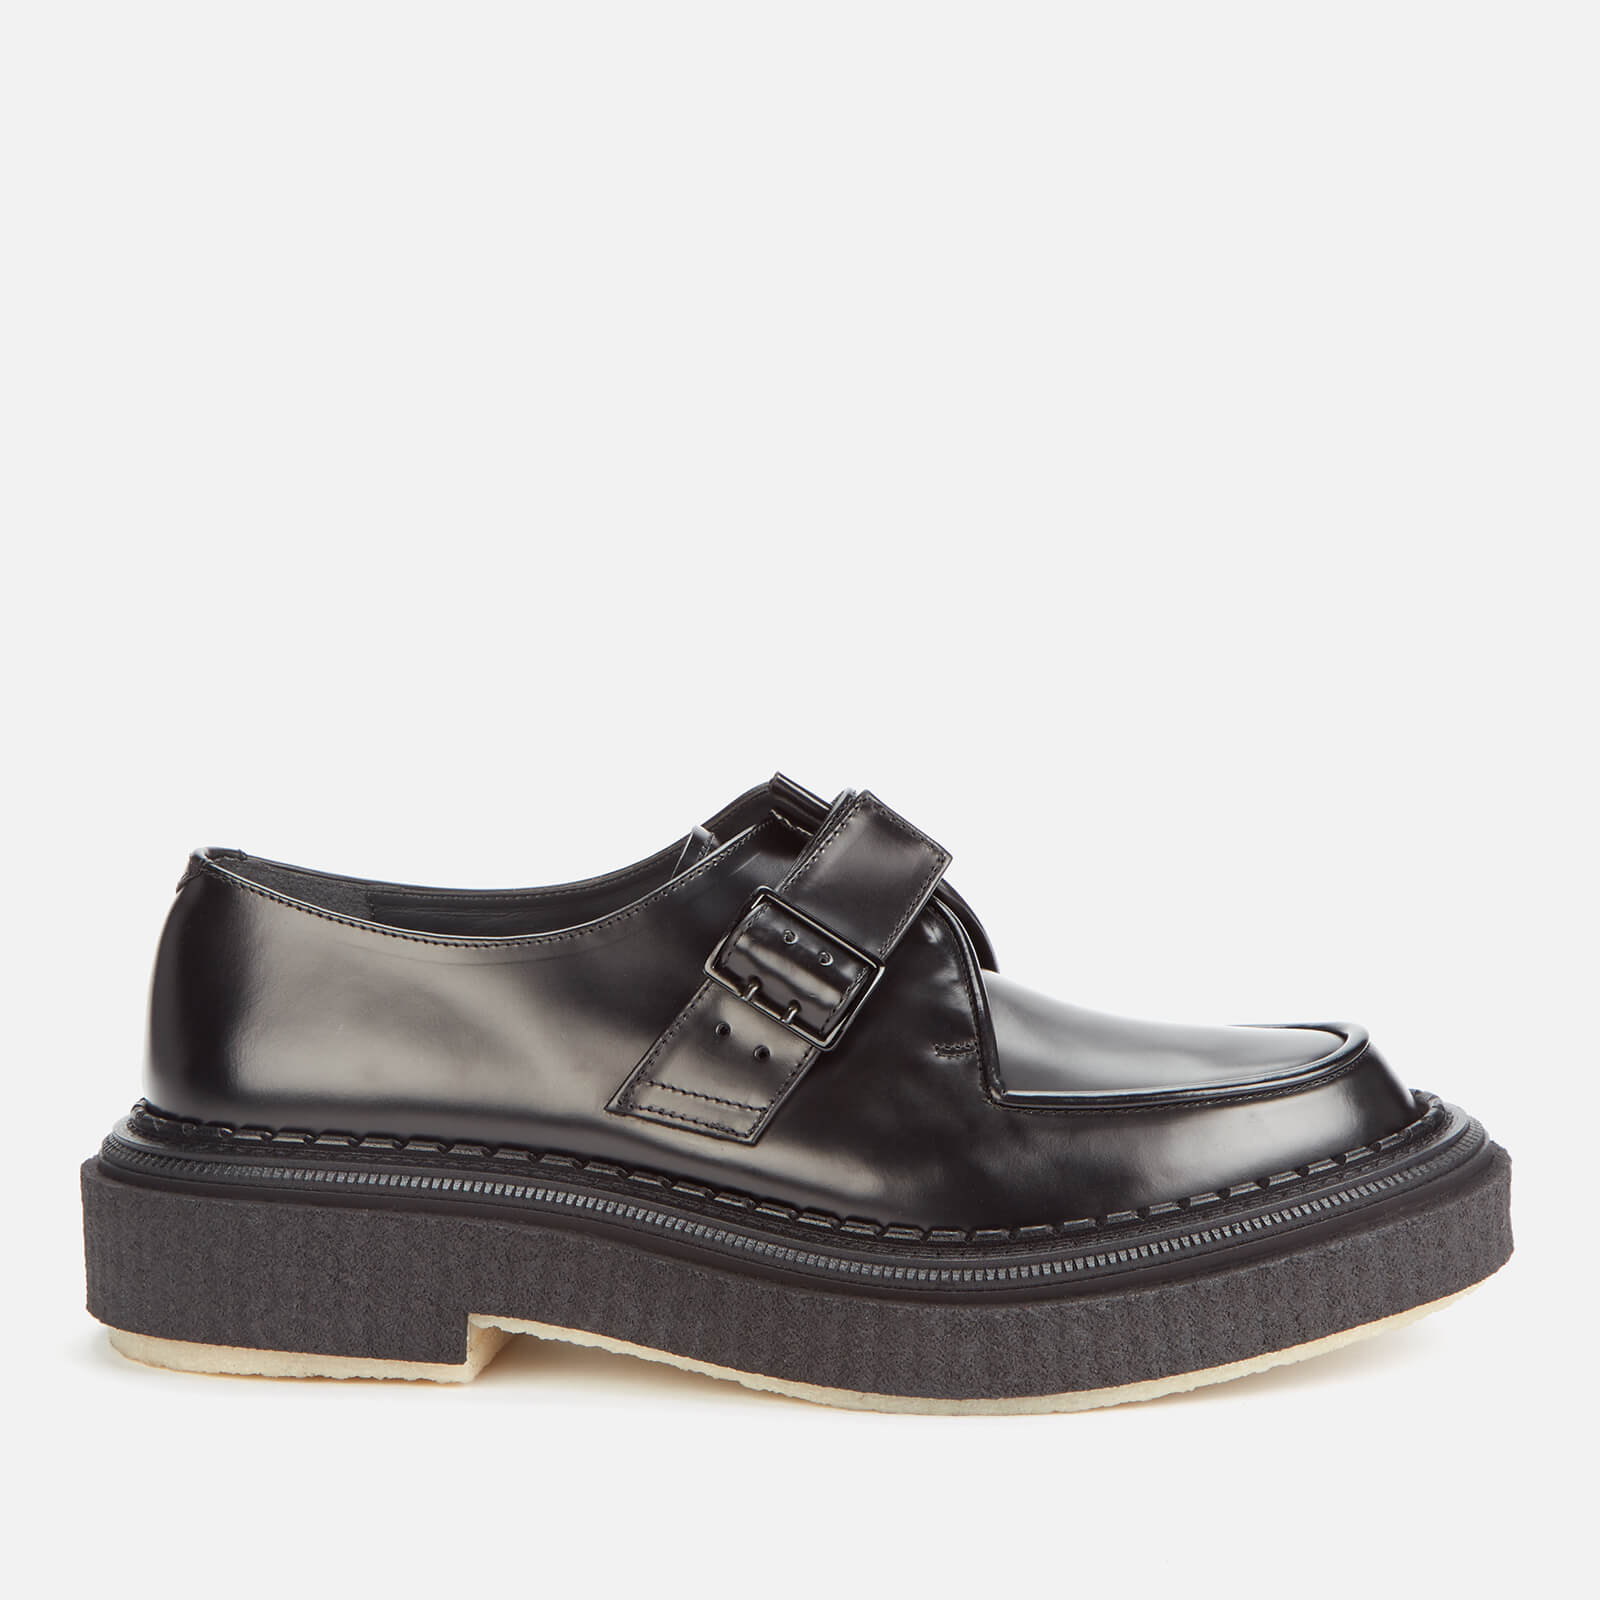 Adieu Men's Type 136 Leather Crepe Sole Single Strap Monk Shoes - Black - UK 7